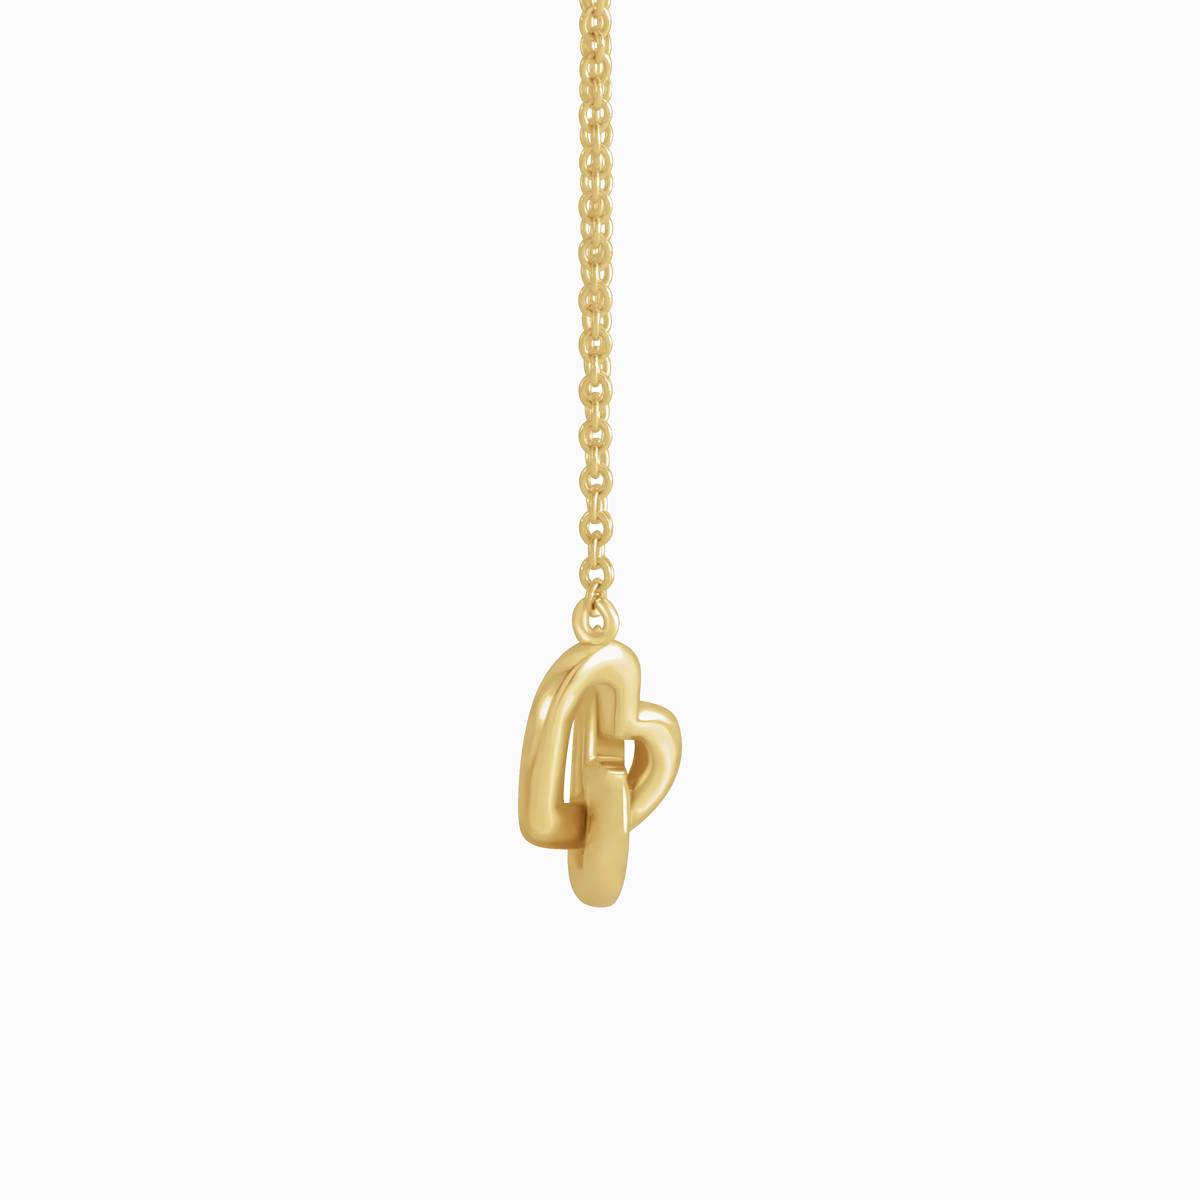 Interlocking Heart Necklace, 14k Yellow Gold